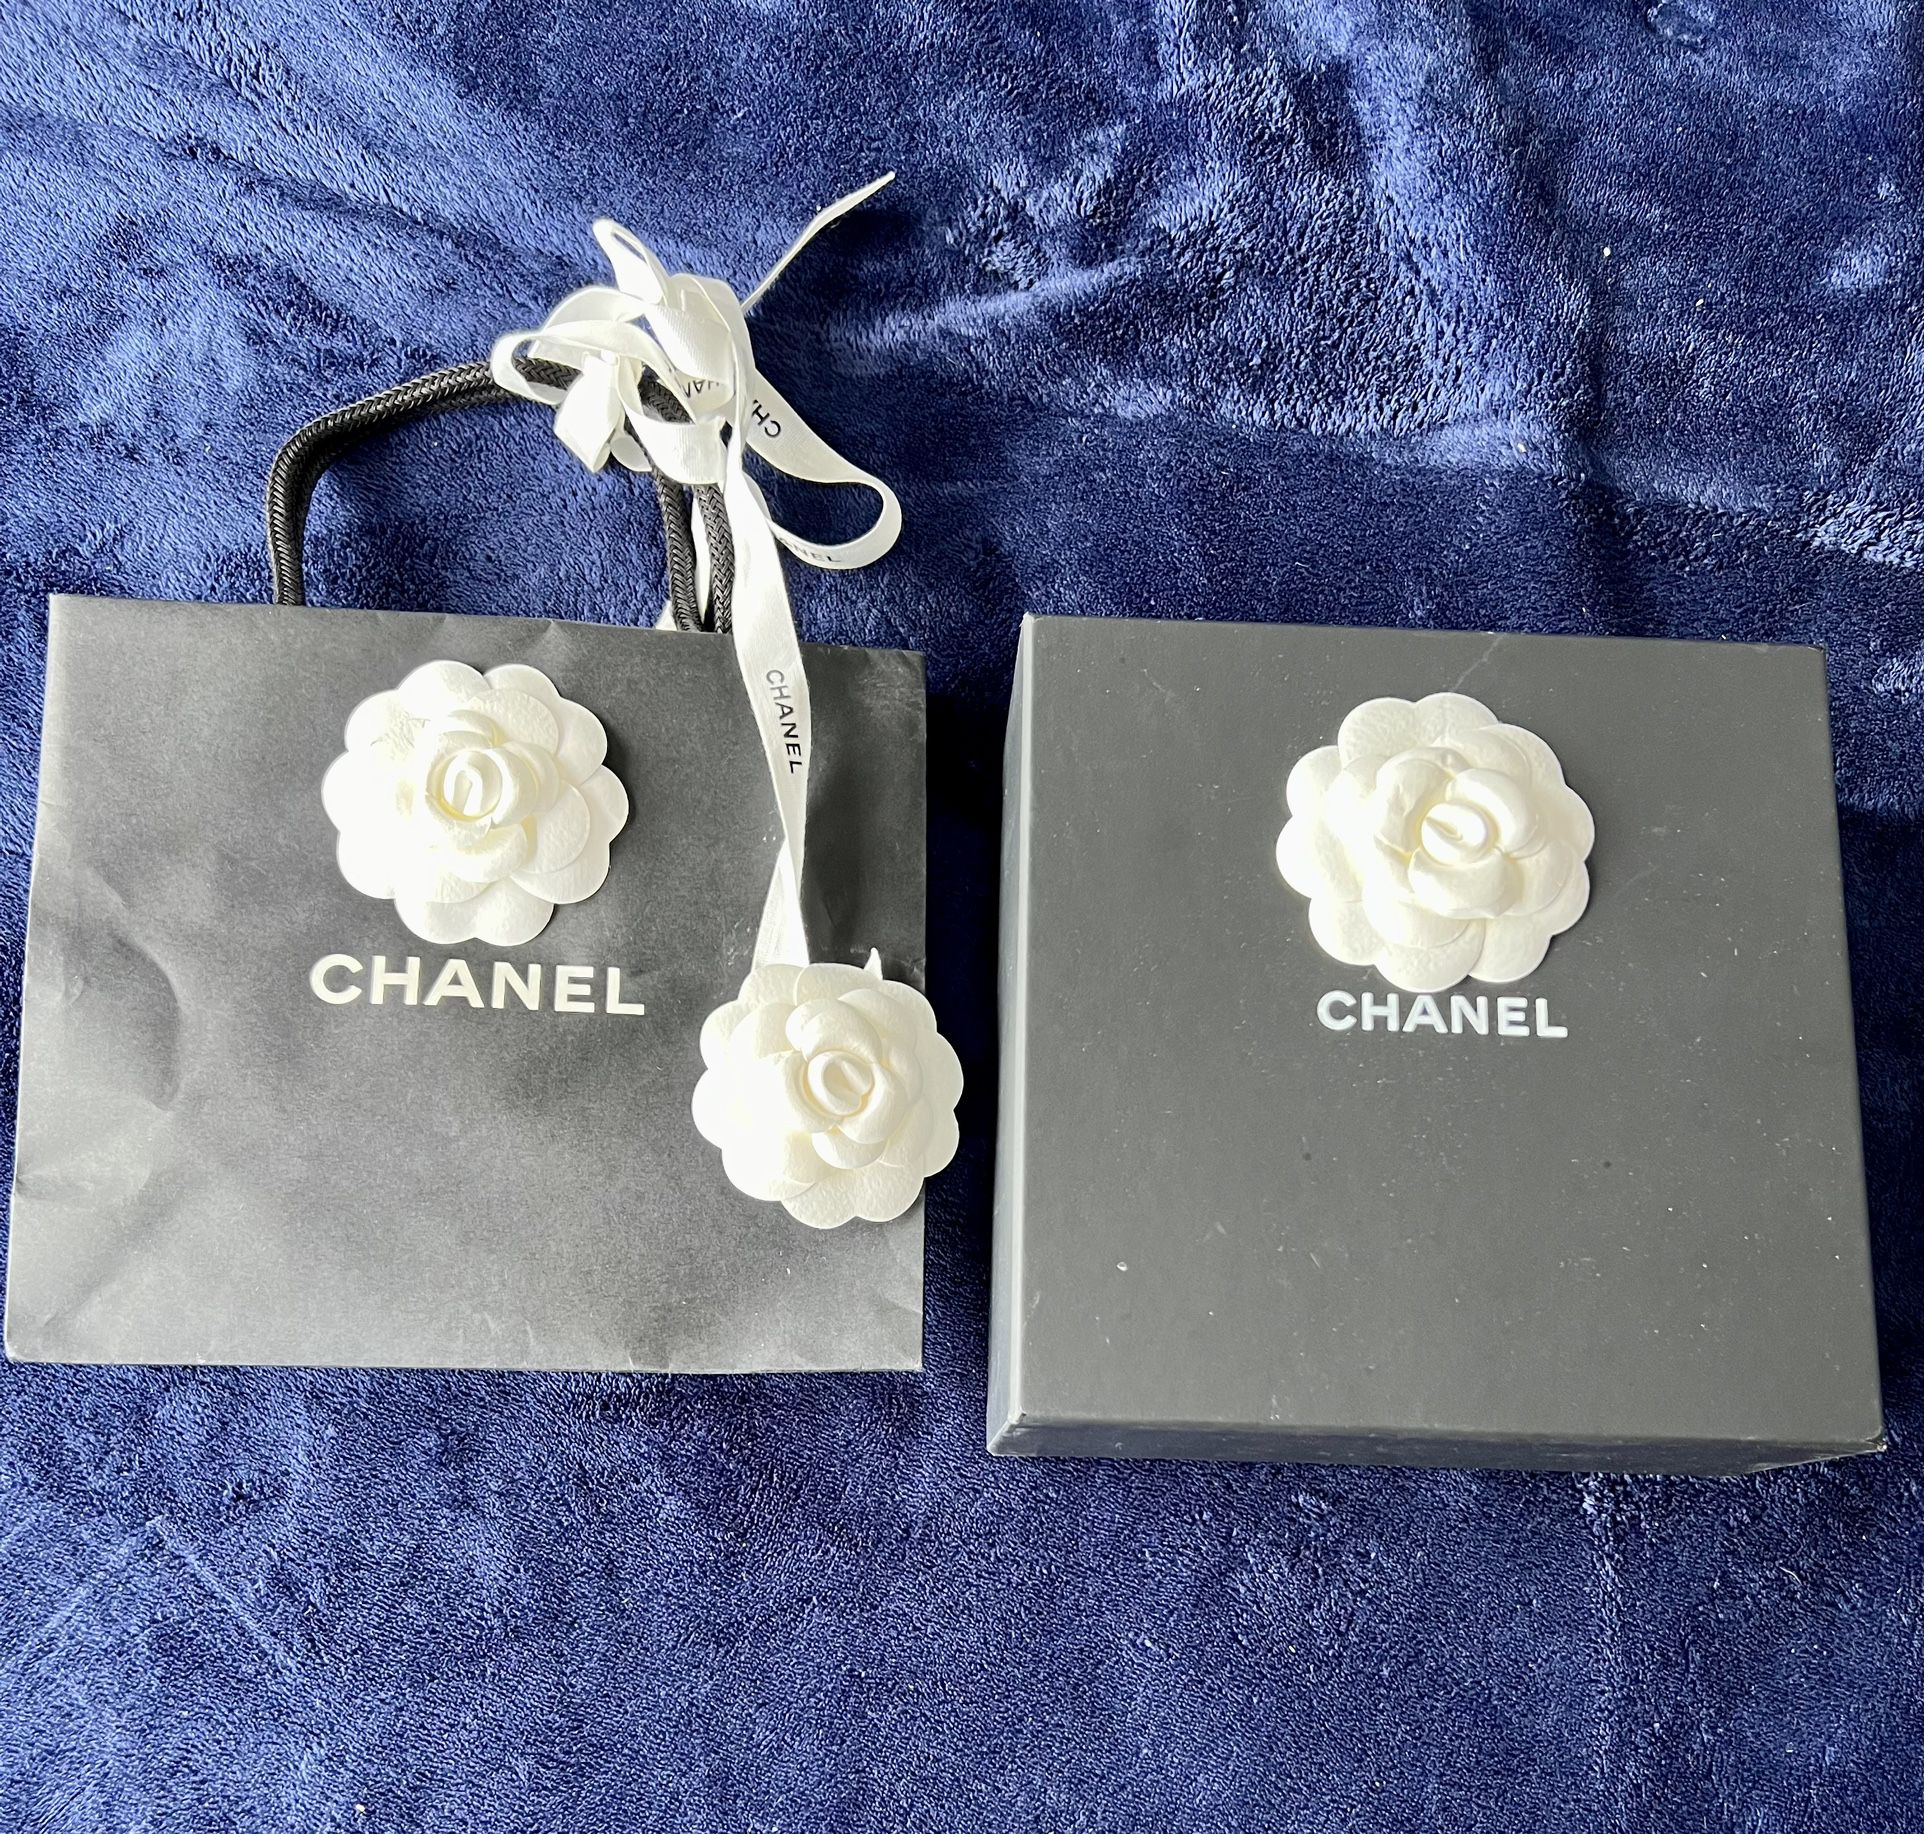 Chanel Box & Shopping Bag